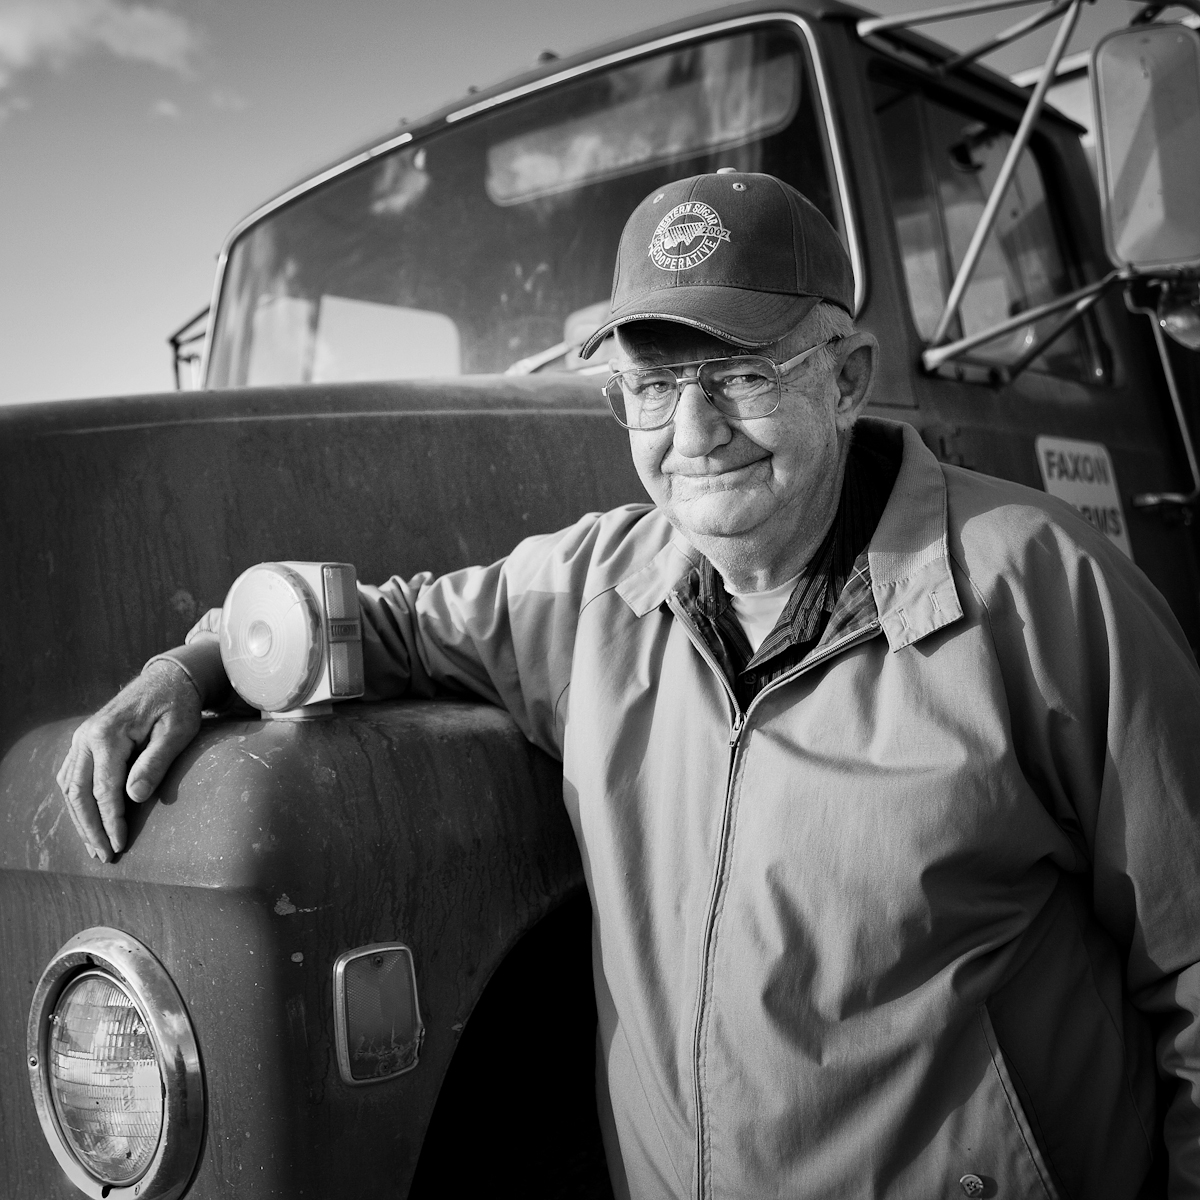   Don Faxon, 3rd generation farmer.     